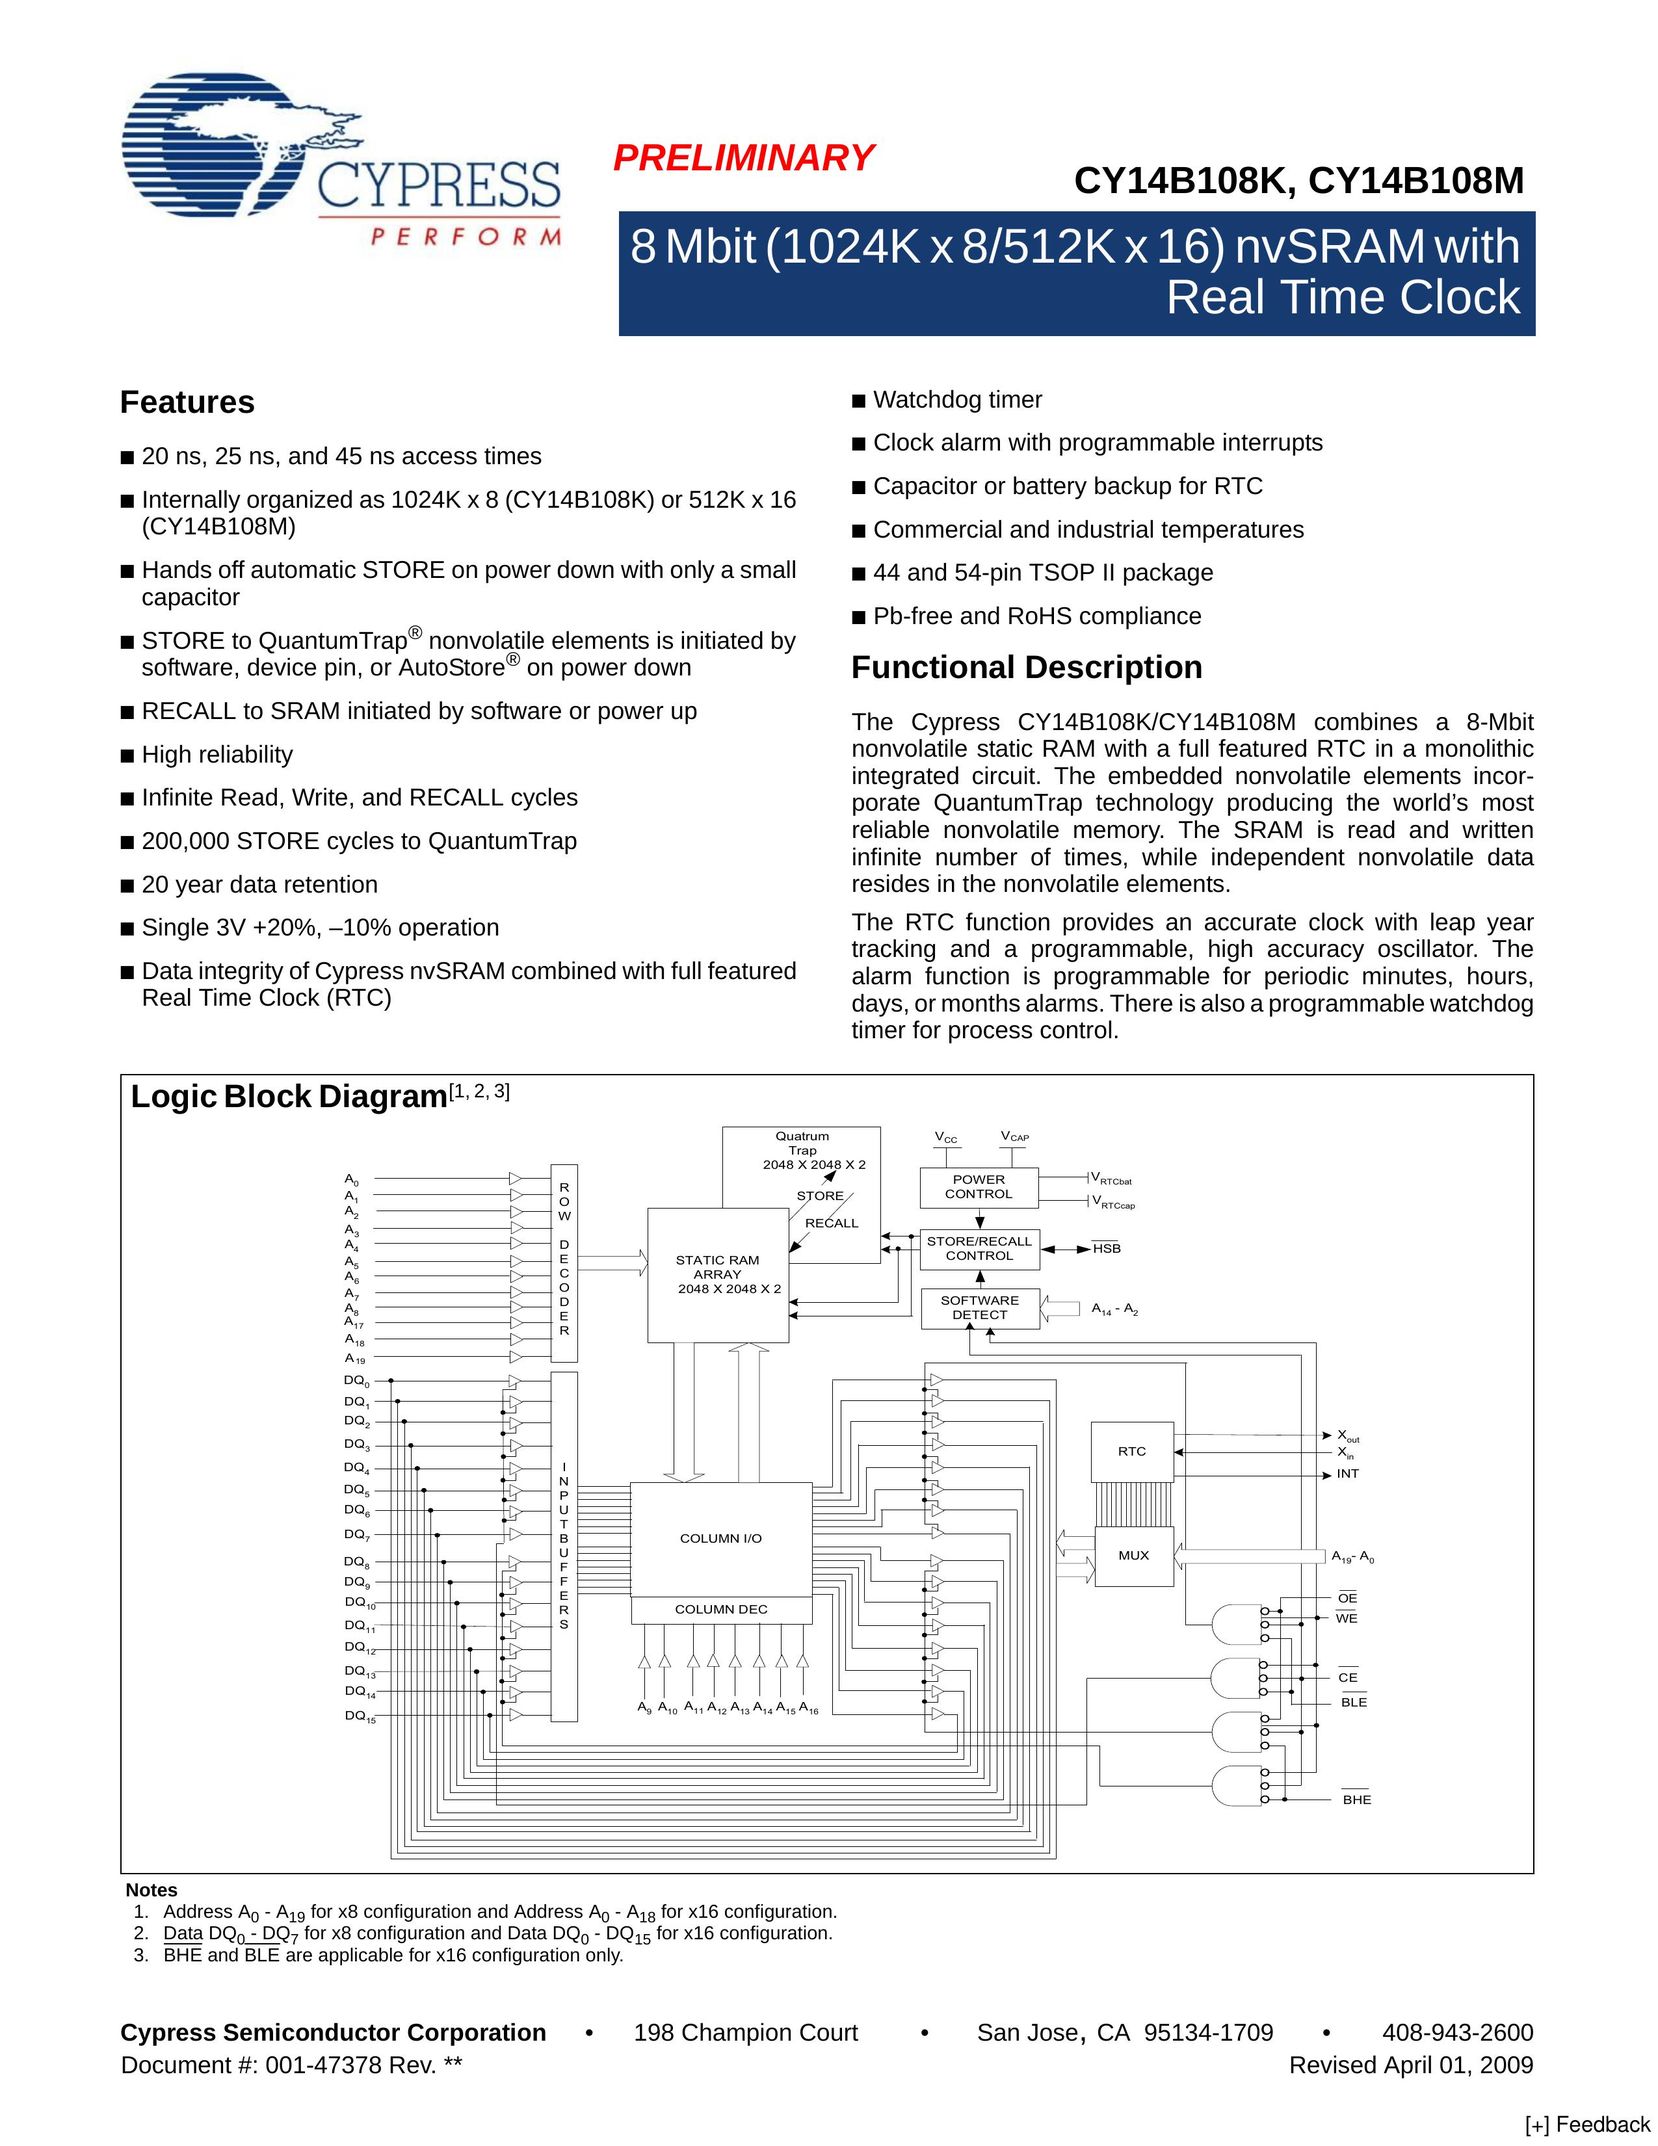 Cypress CY14B108M Computer Hardware User Manual